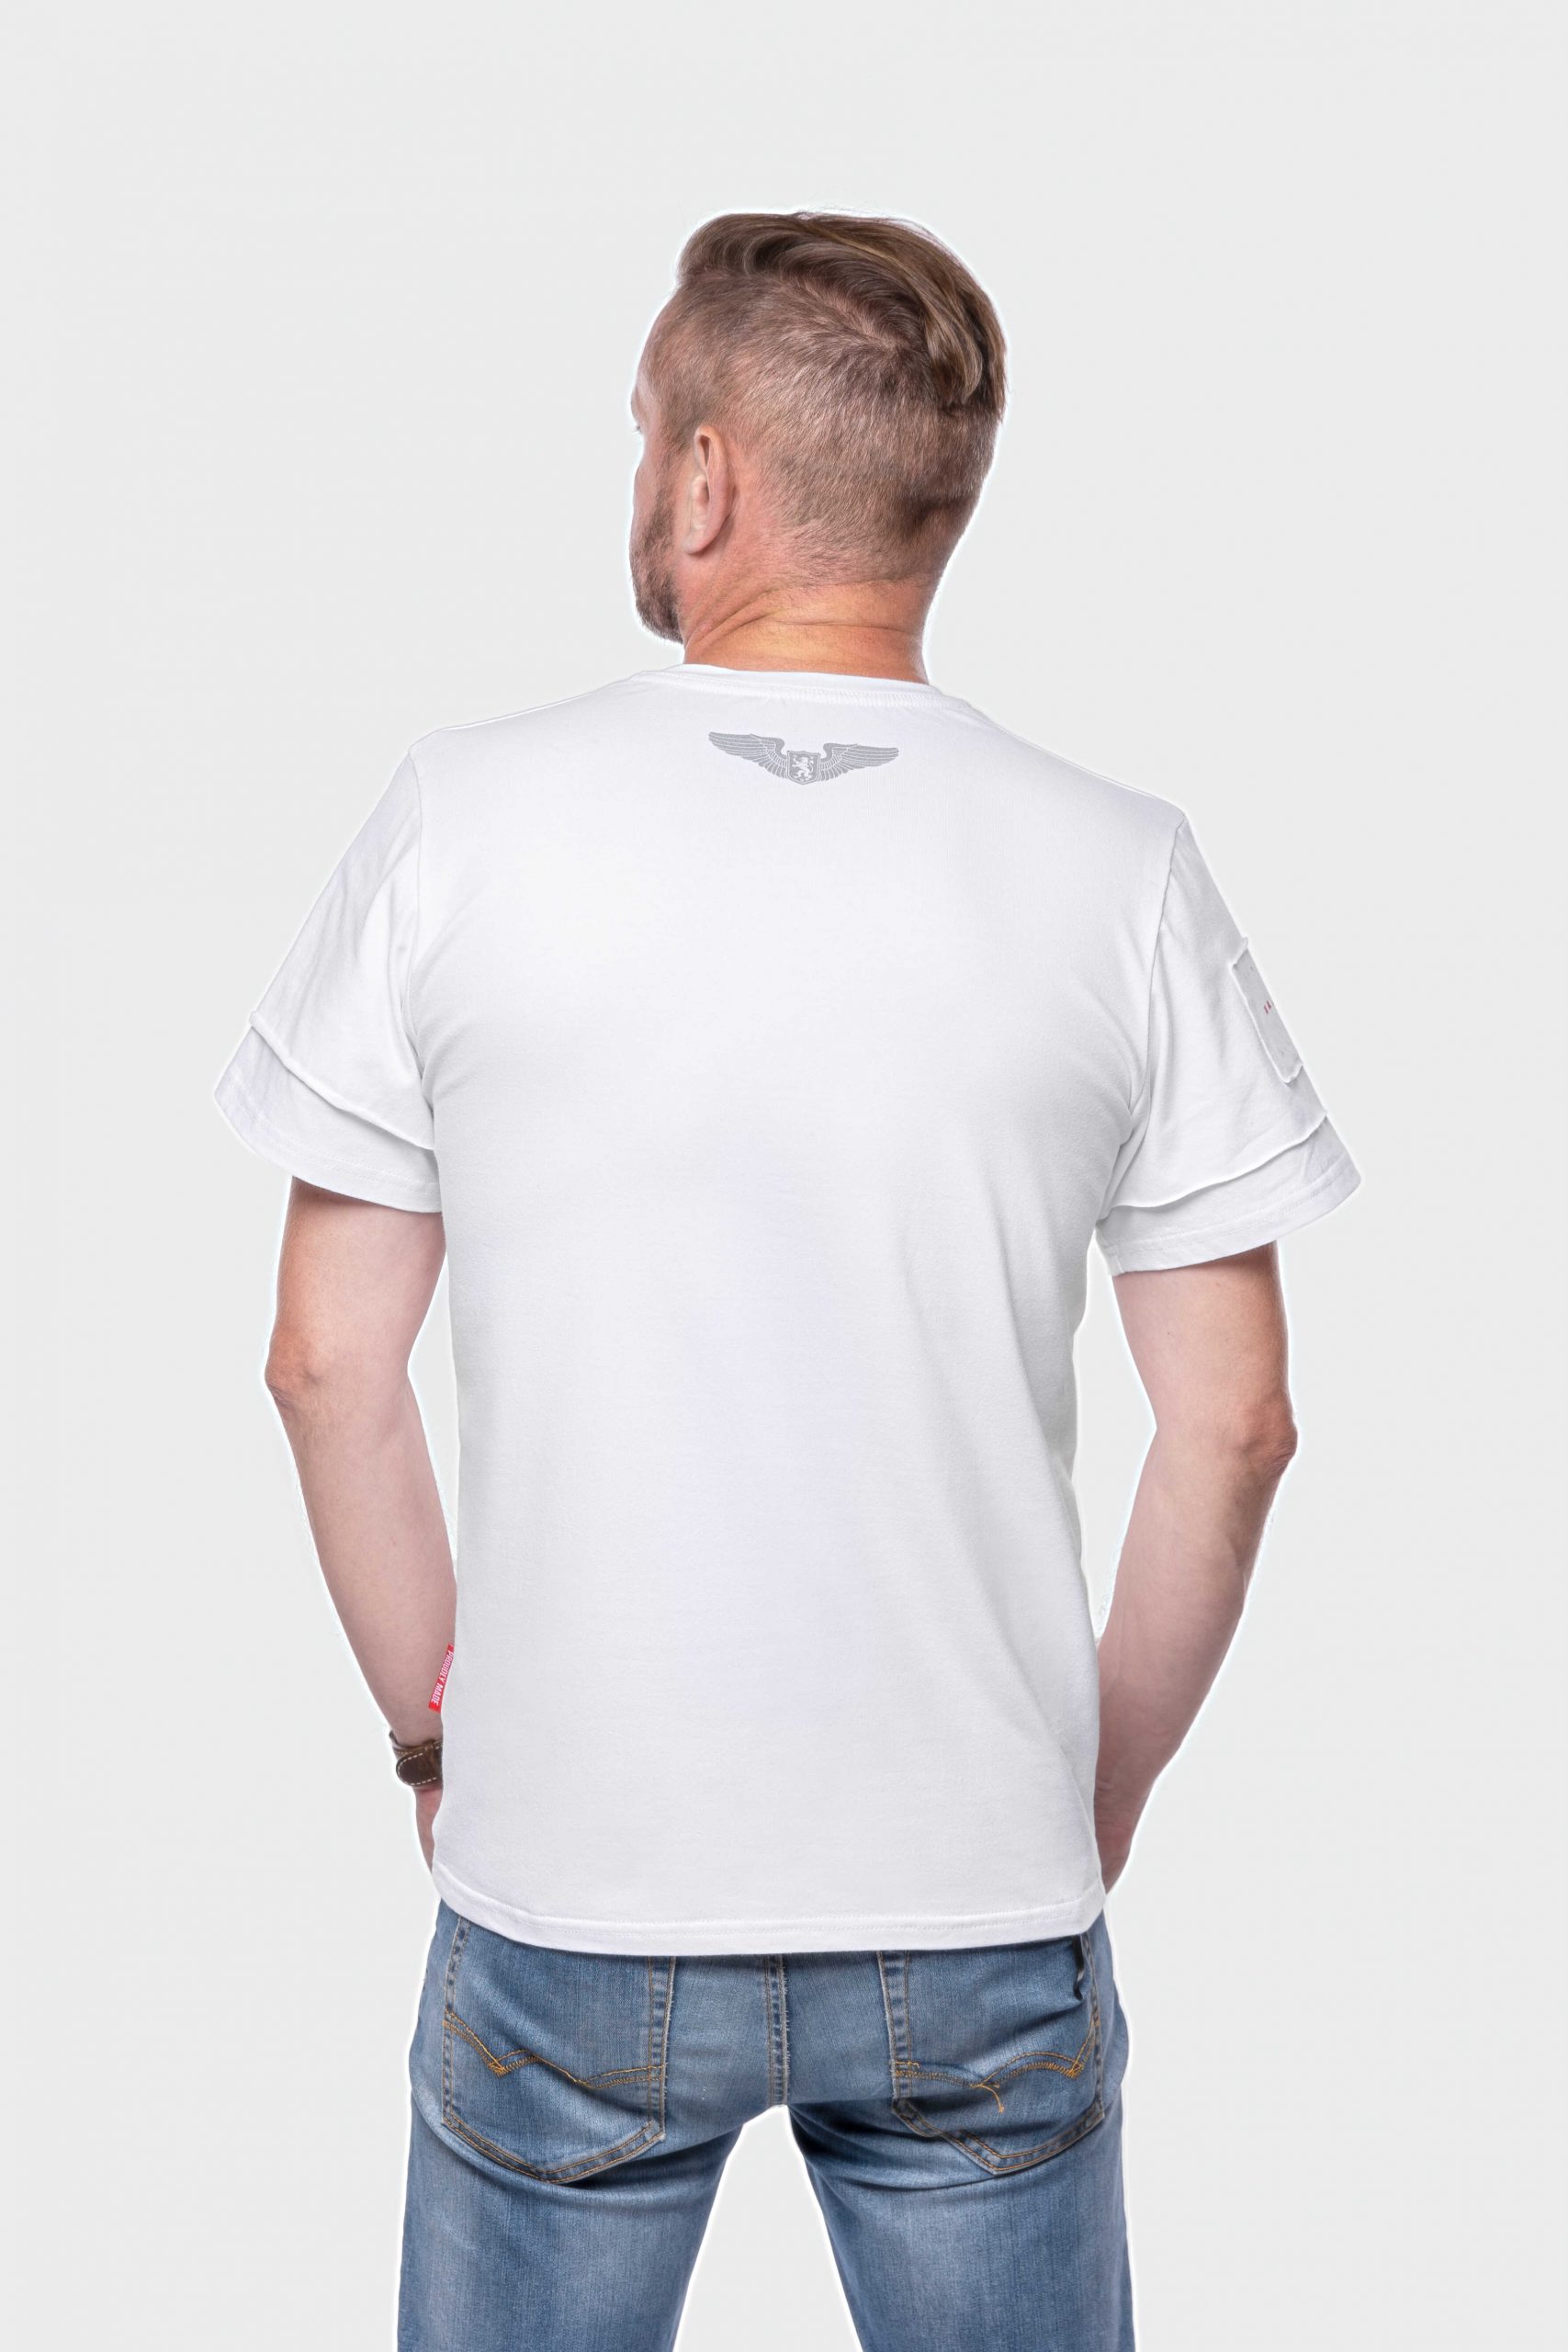 Men's T-Shirt Ukrainian. Color white. 
Unisex T-shirt (men’s sizes).